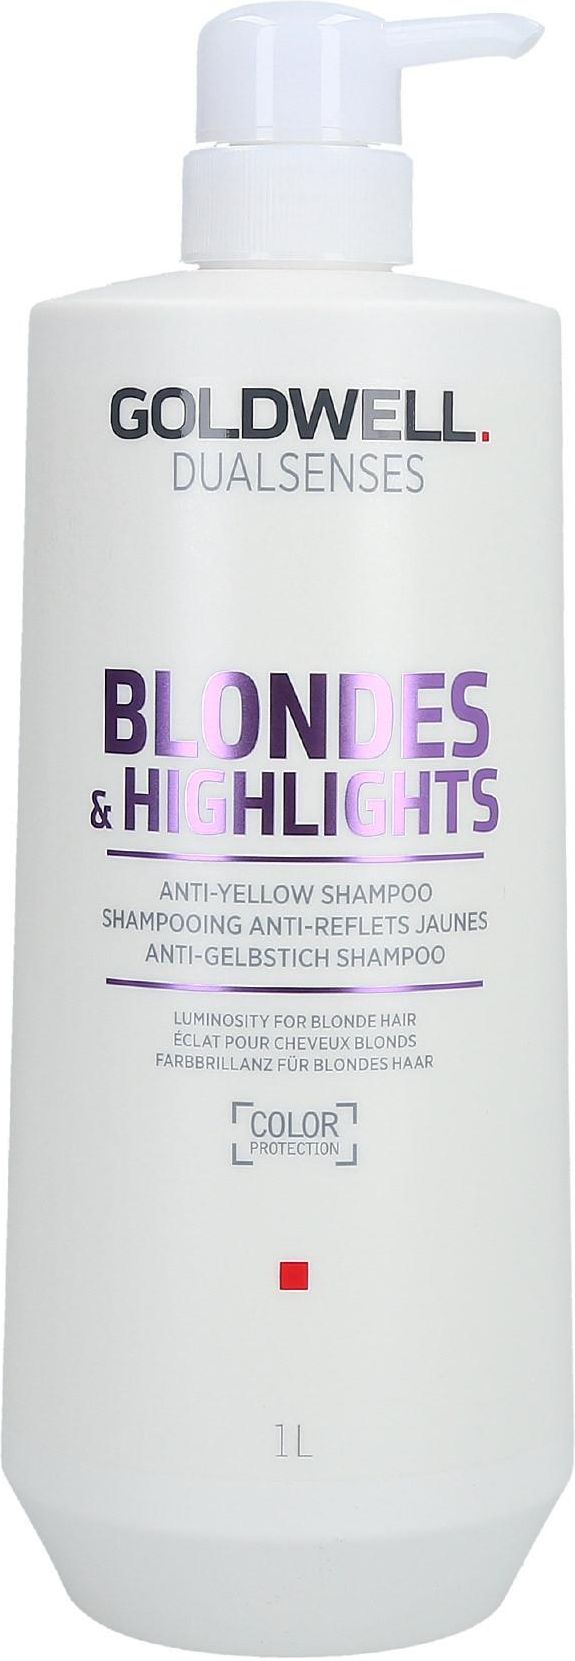 goldwell dualsenses blondes & highlights szampon do włosów po balejażu